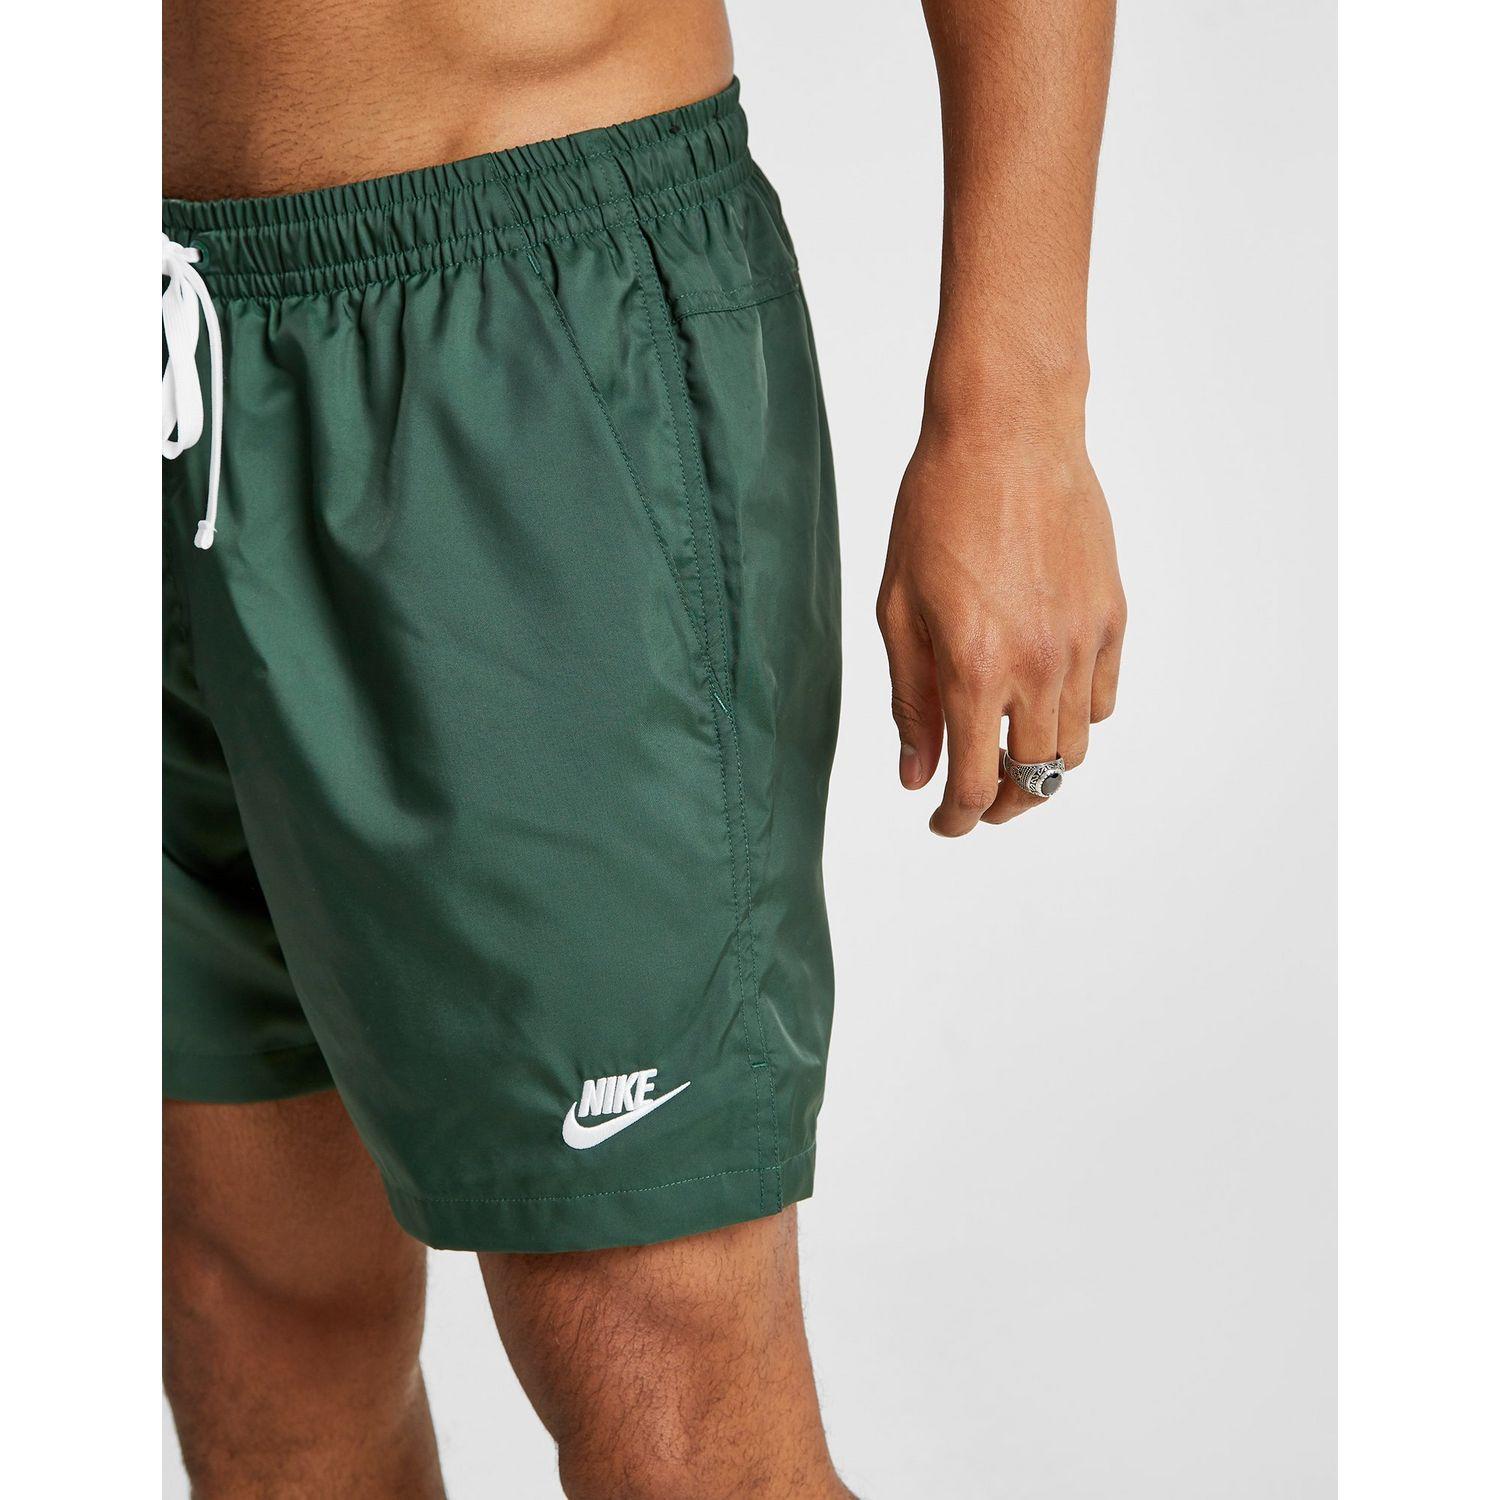 Buy > nike woven flow shorts green > in stock